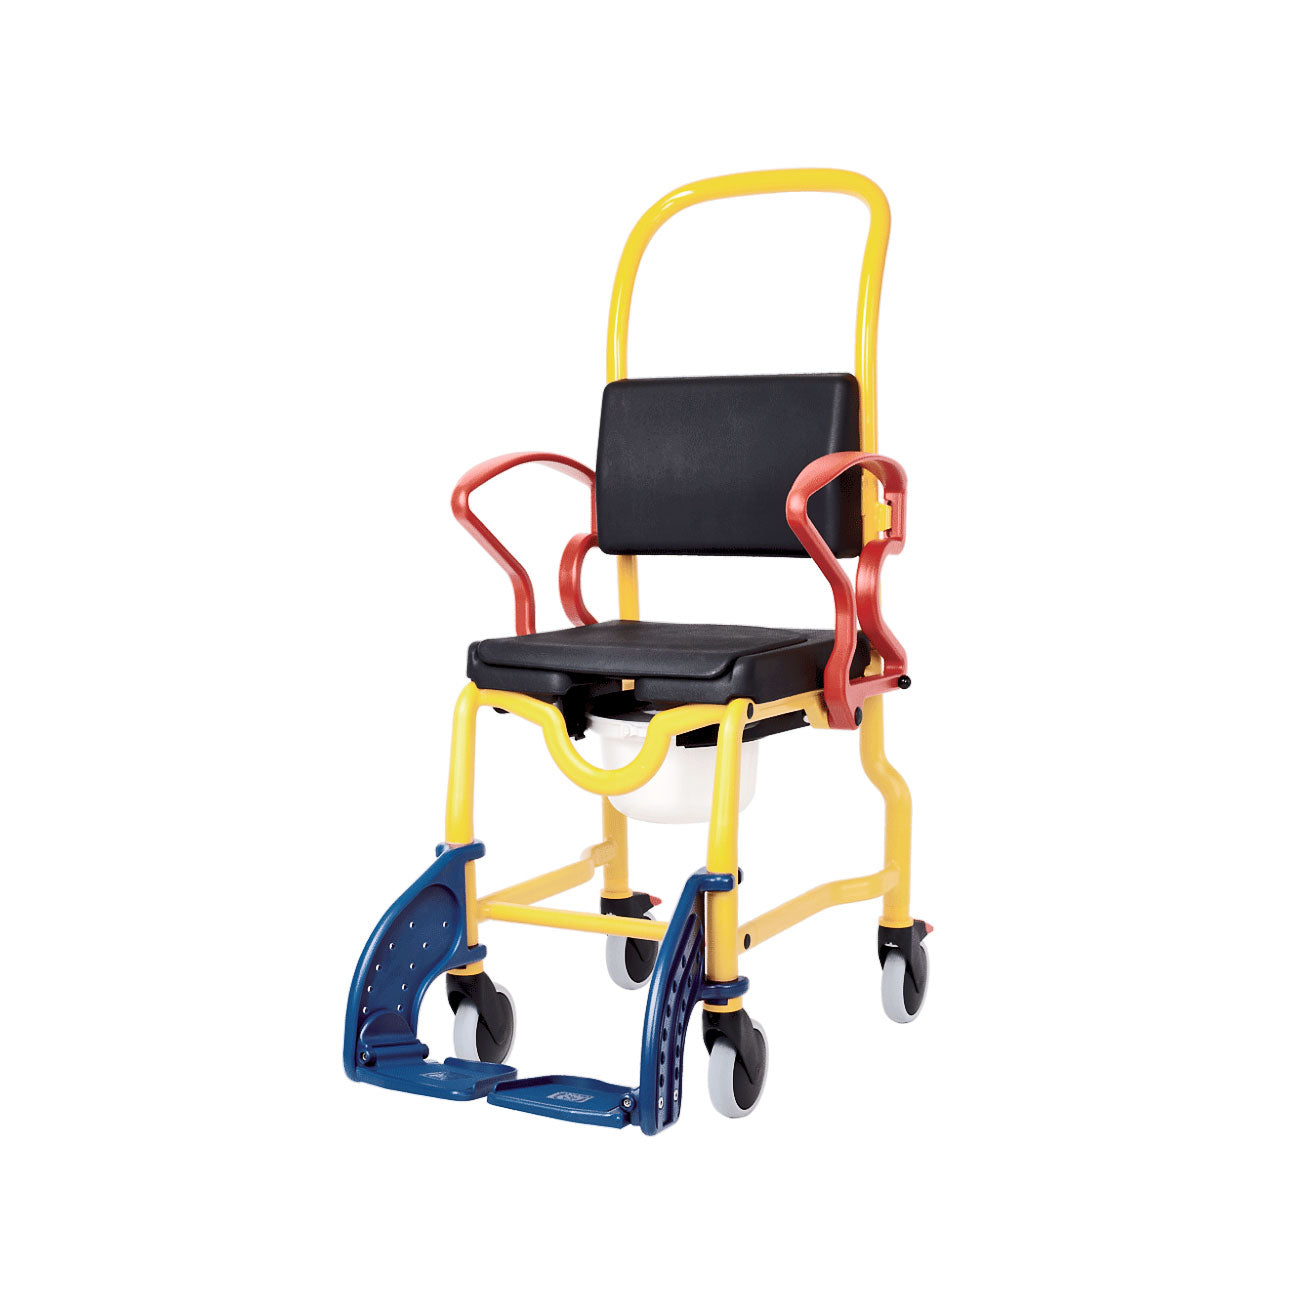 Rebotec Augsburg - Shower Commode Chair For Children